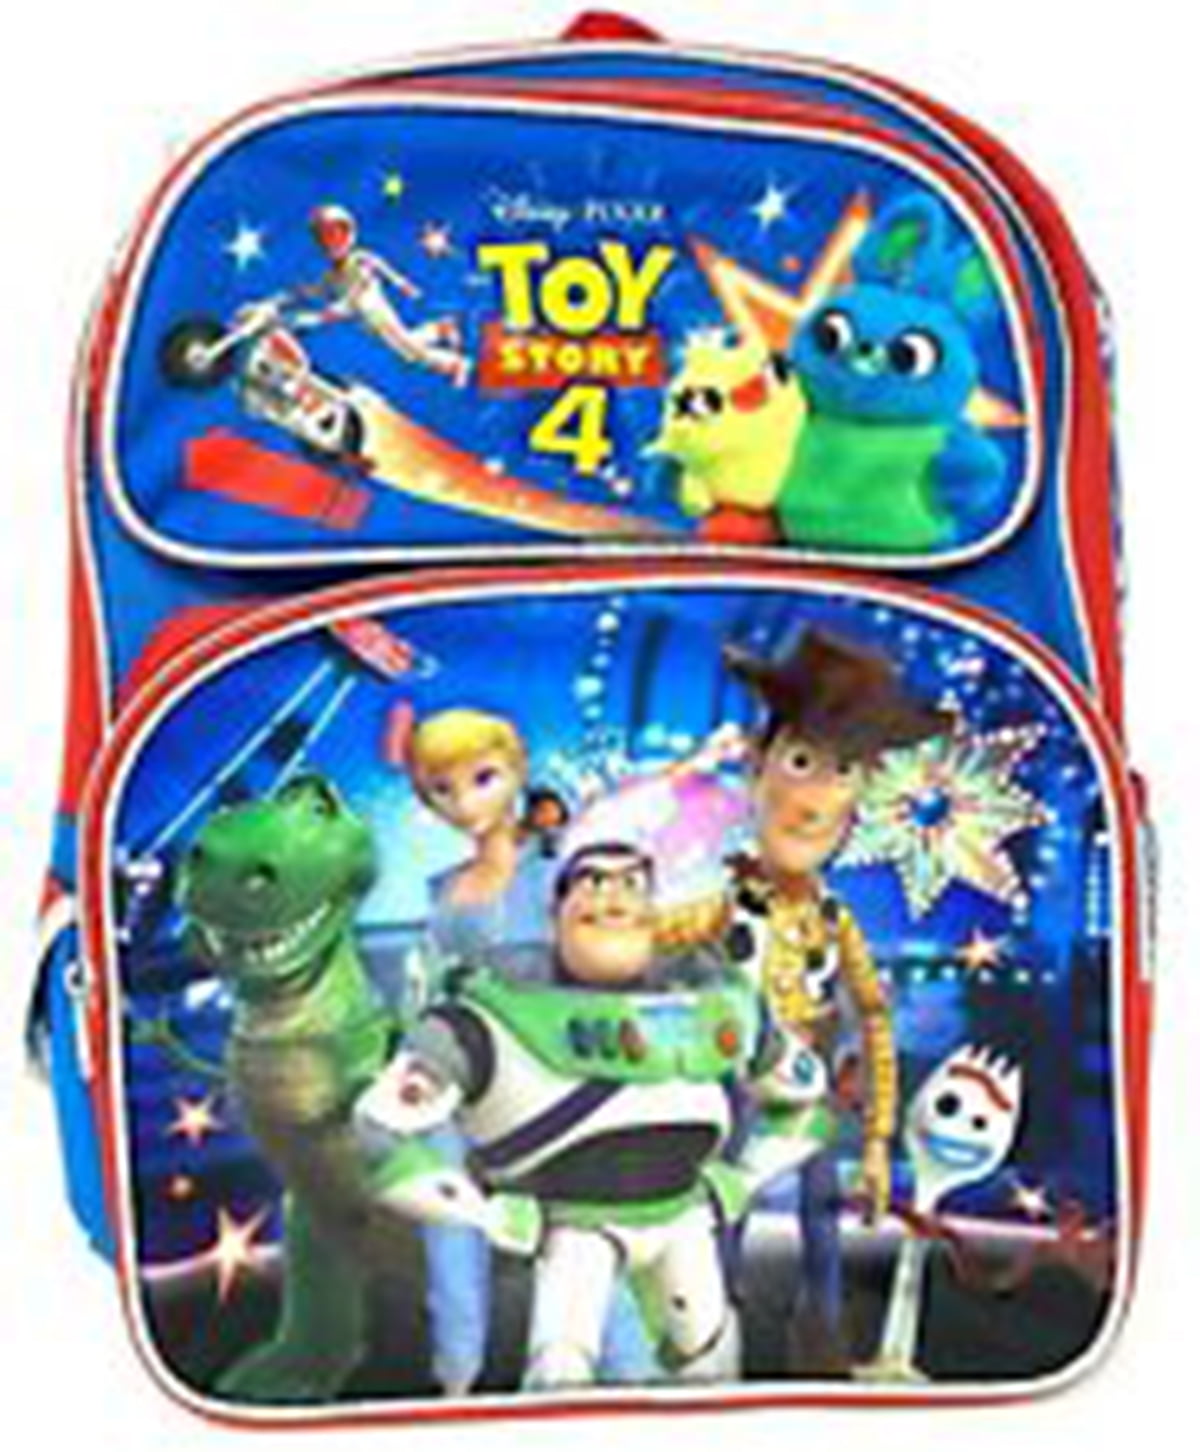 Disney Pixar Toy Story 4 12" Canvas Blue School Backpack